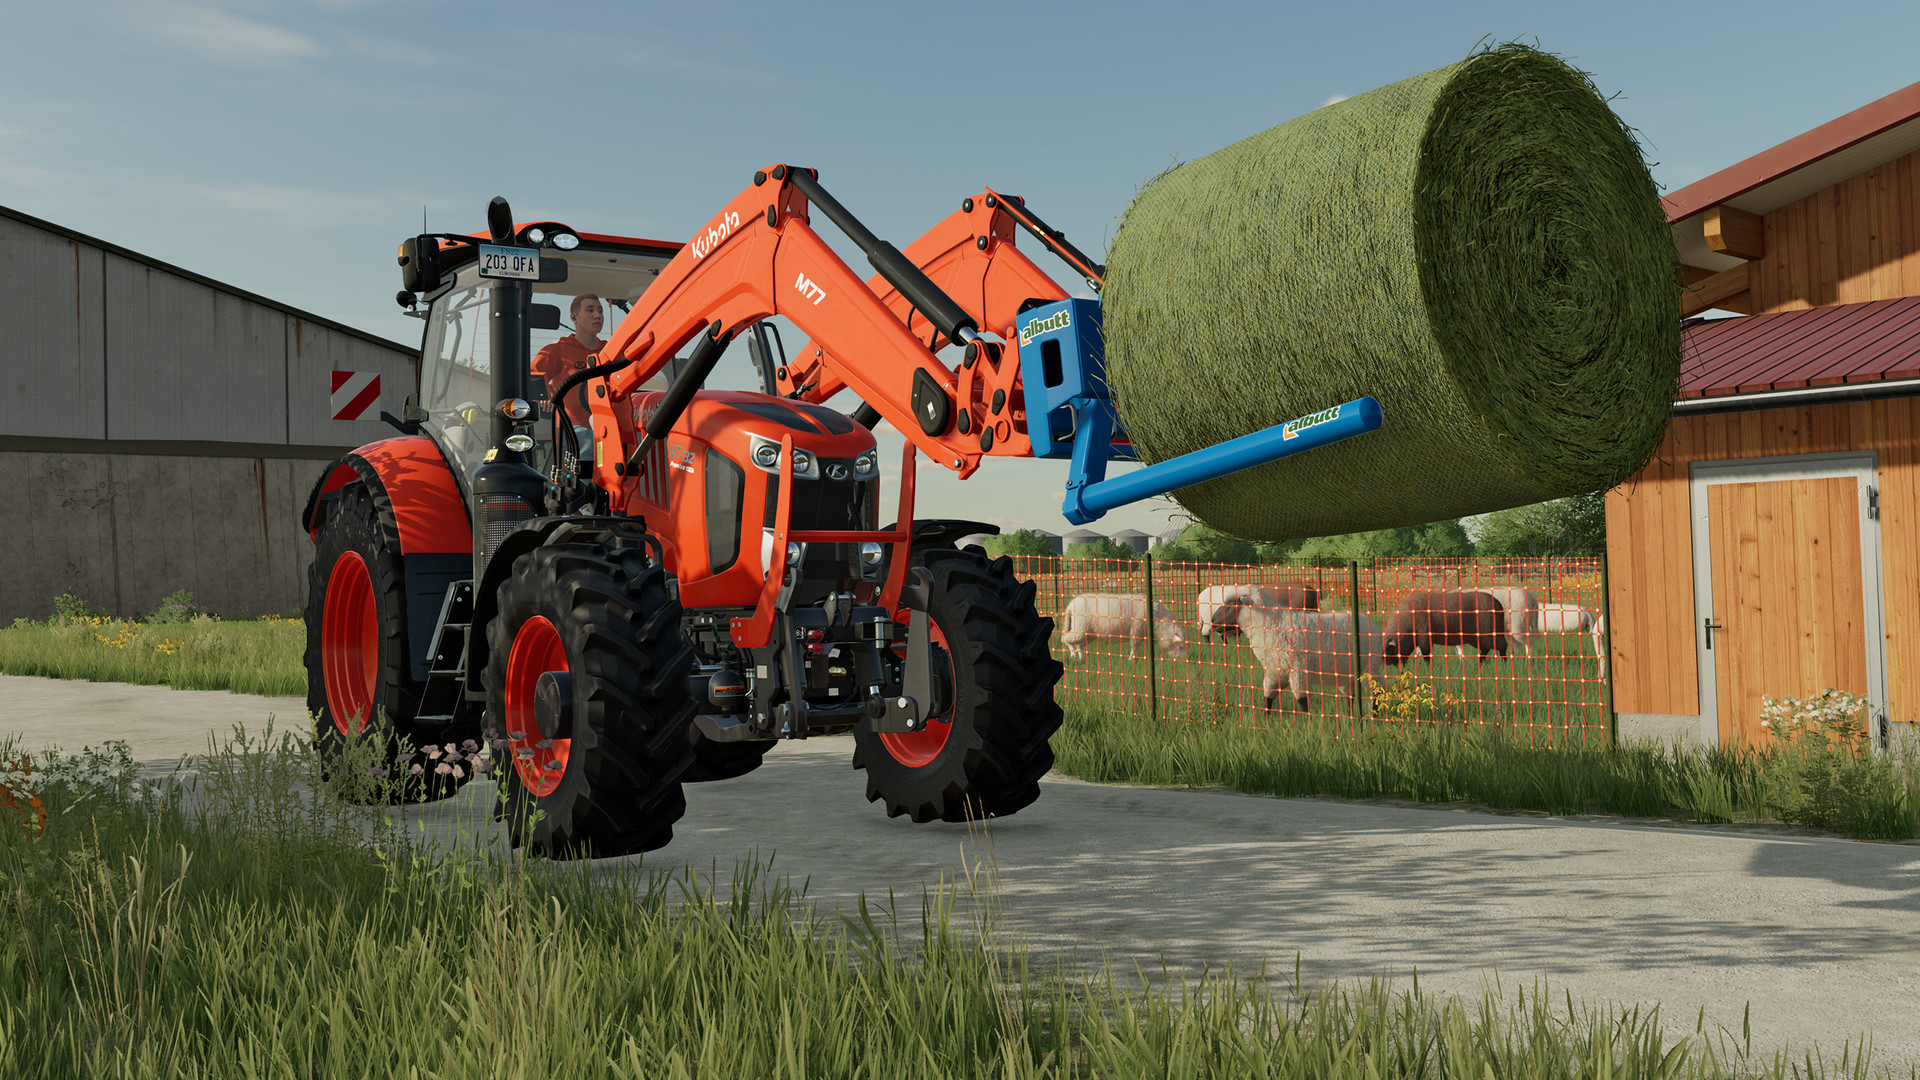 Farming Simulator 22 bei Steam